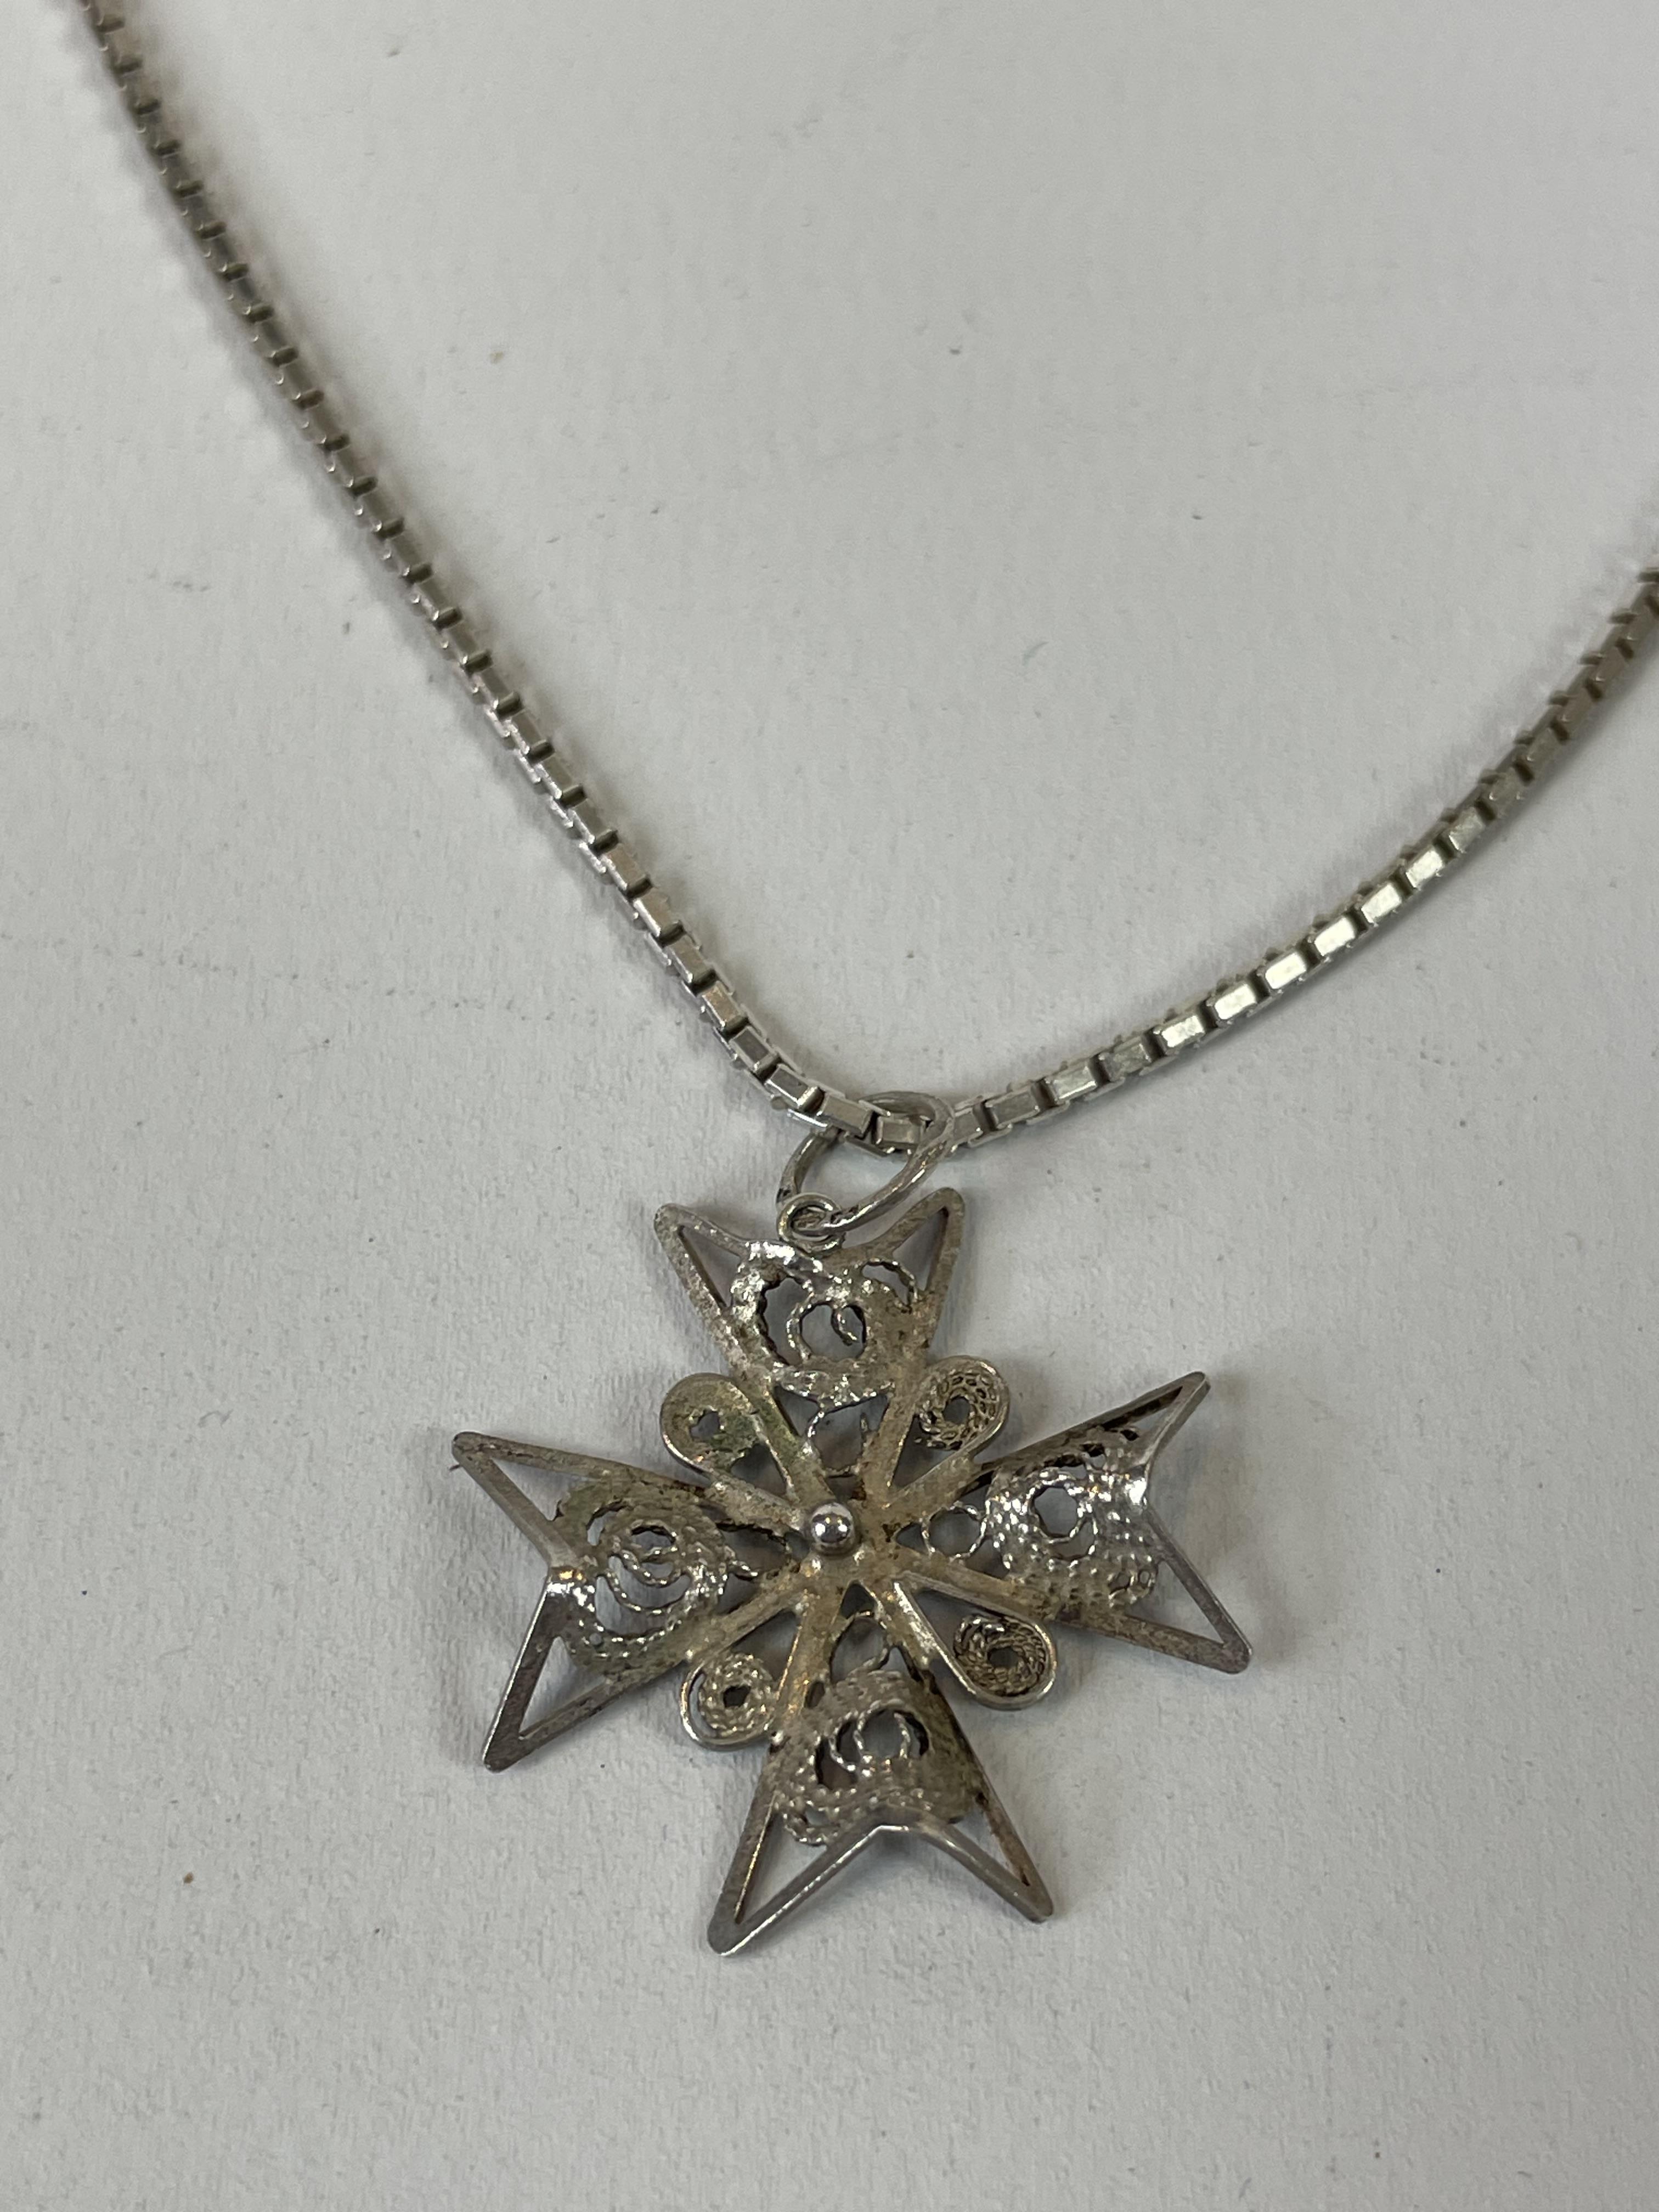 Silver necklace with filigreecross pendant - Bild 2 aus 2